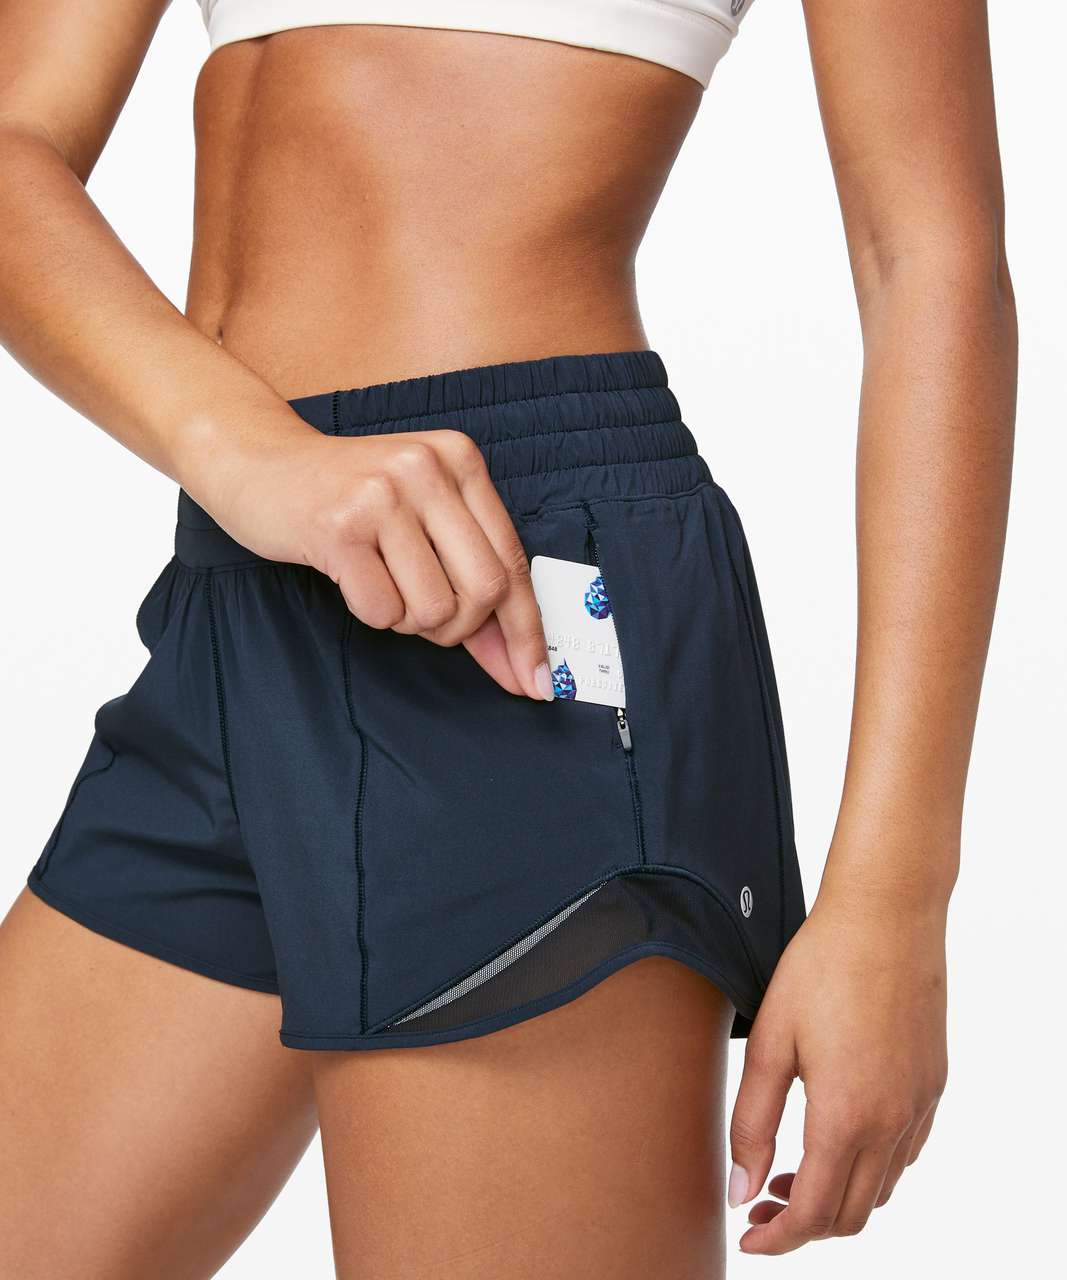 Lululemon Dark Blue Hotty Hot Shorts 2.5” - $45 (30% Off Retail) - From  Ellery